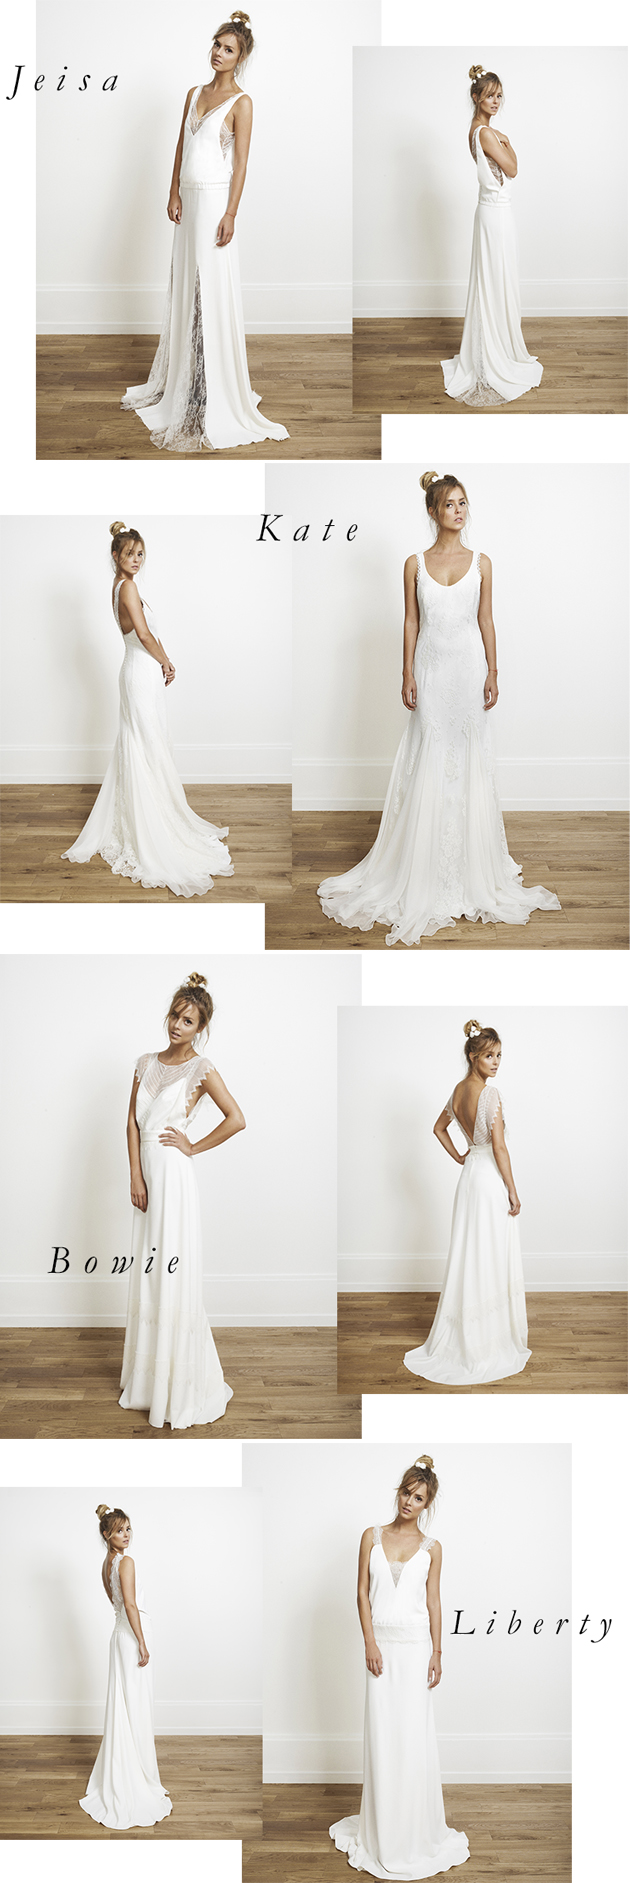 wedding dress inspiration2 vivat veritas